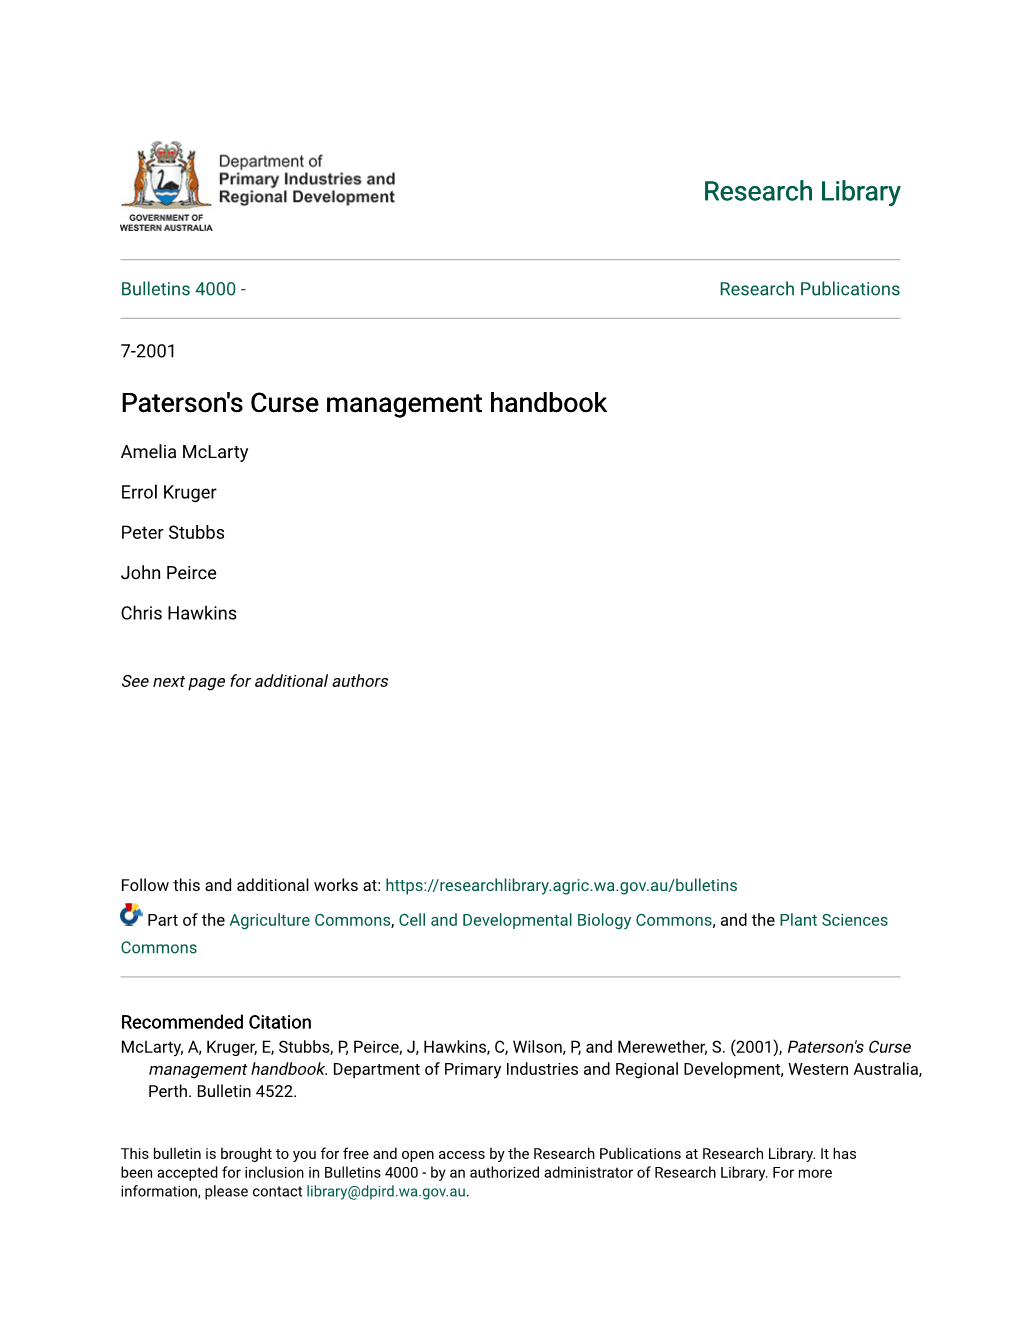 Paterson's Curse Management Handbook